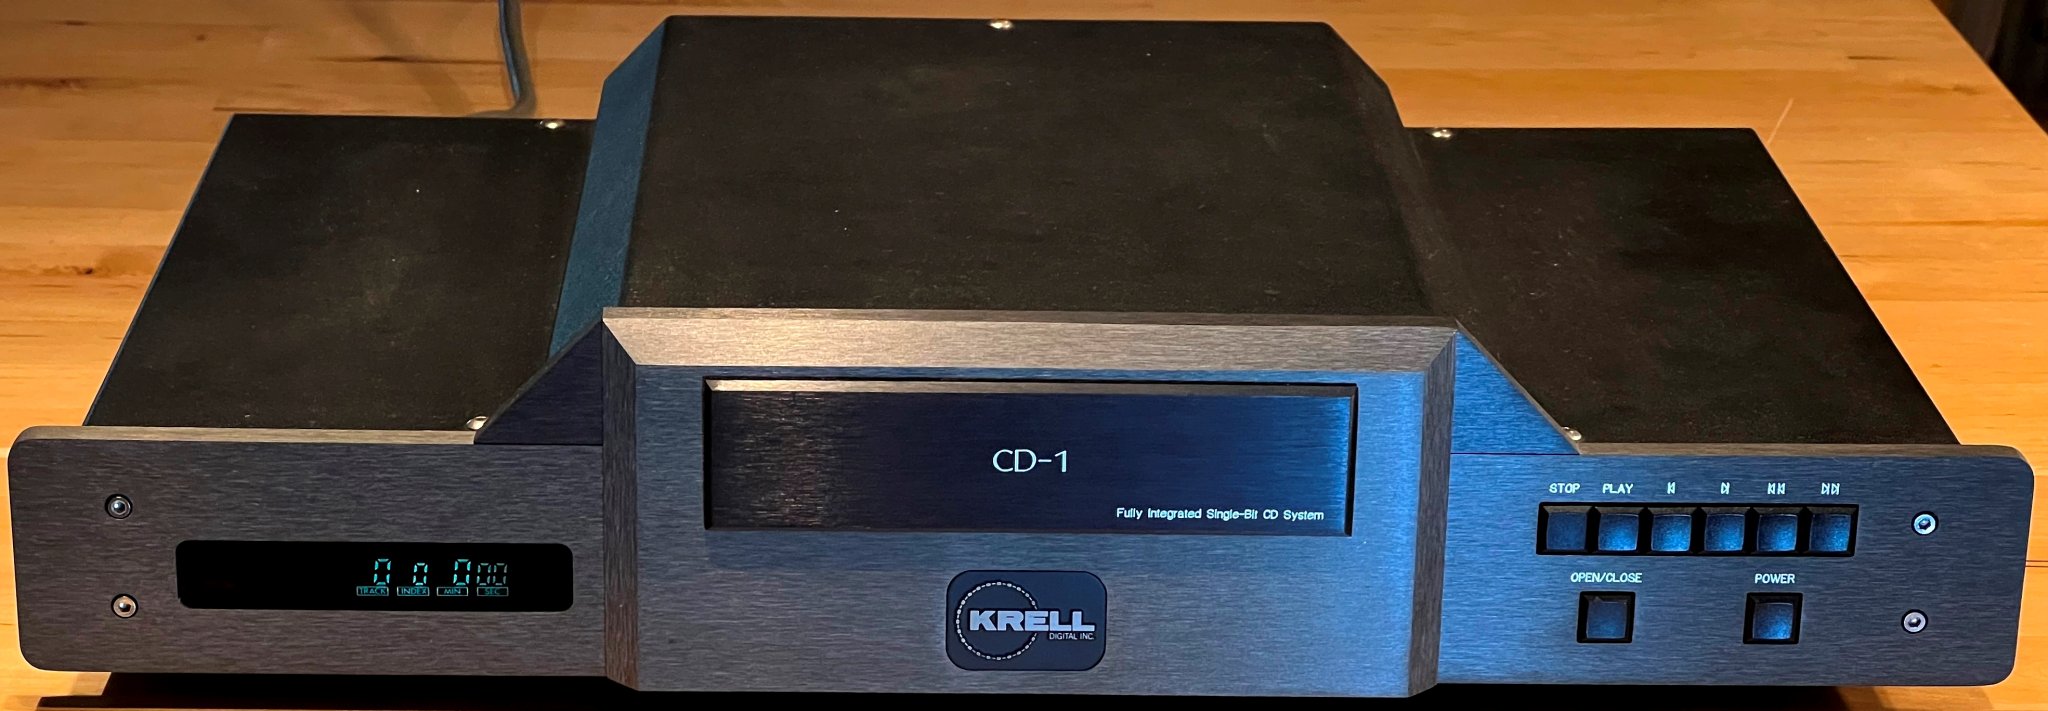 Krell_CD-1_Player.jpg